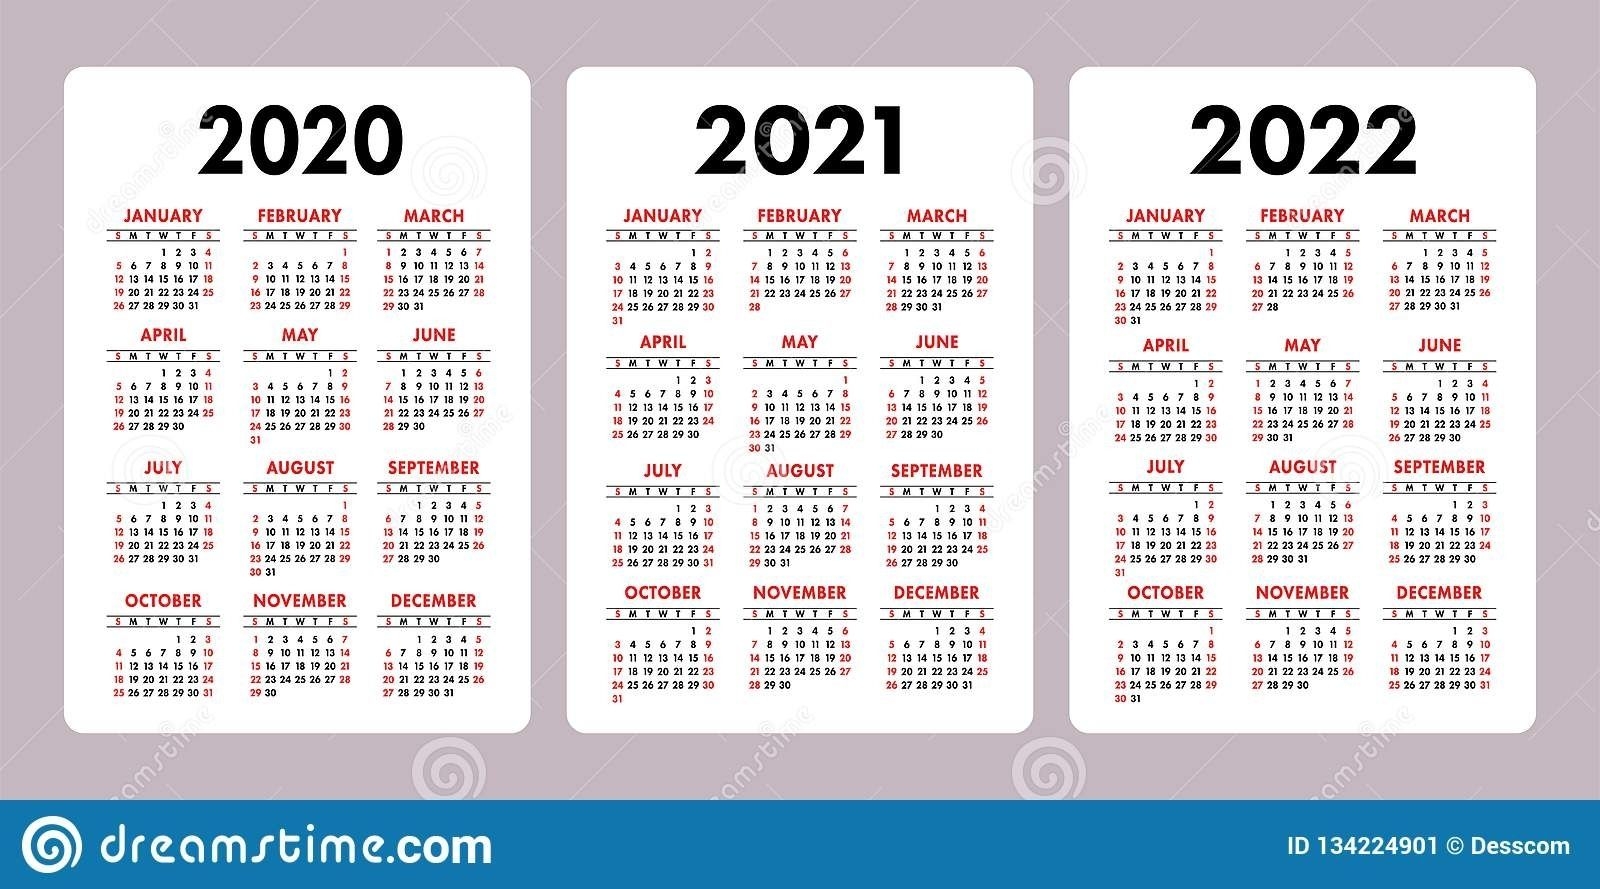 2020 - 2022 Printable Calendar - Calendar Inspiration Design